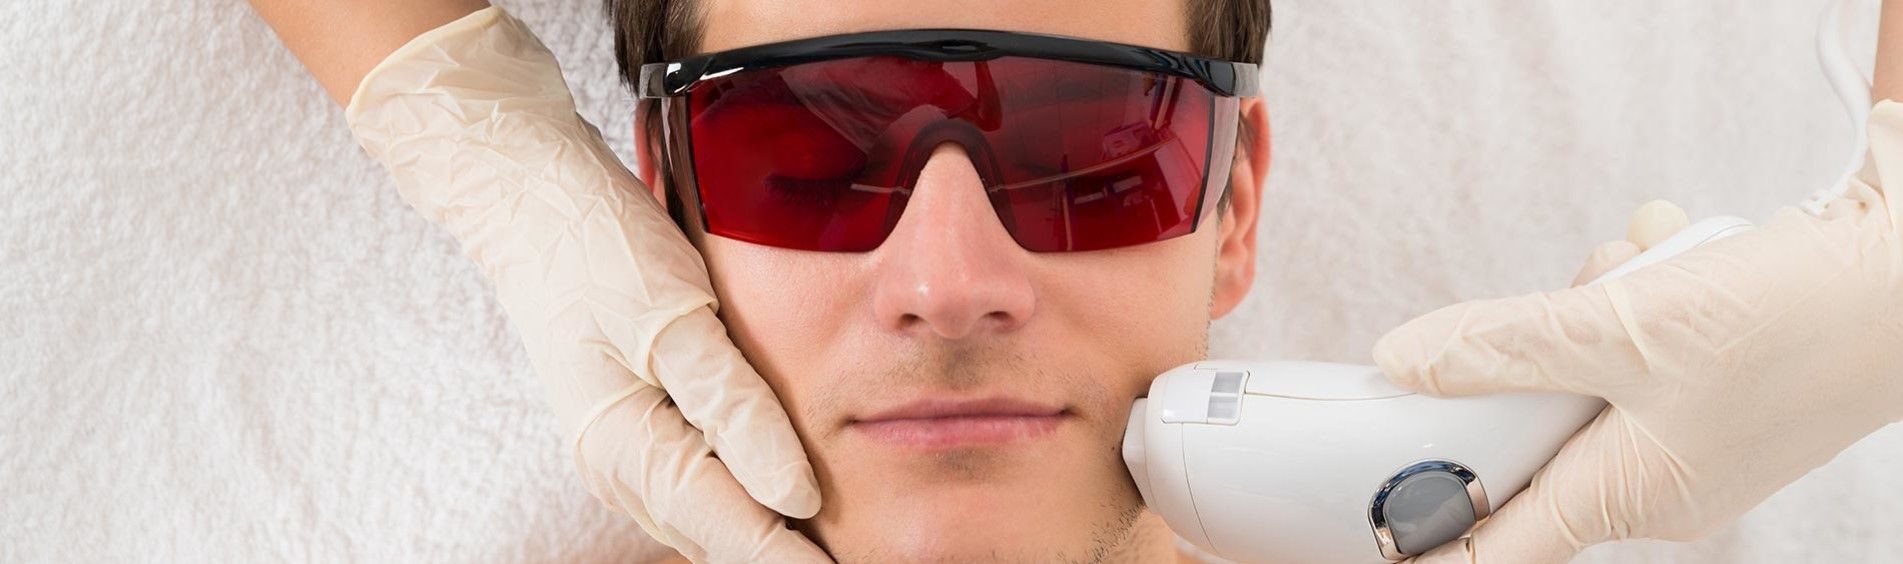 blefaroplastia laser clinica doctora barba madrid